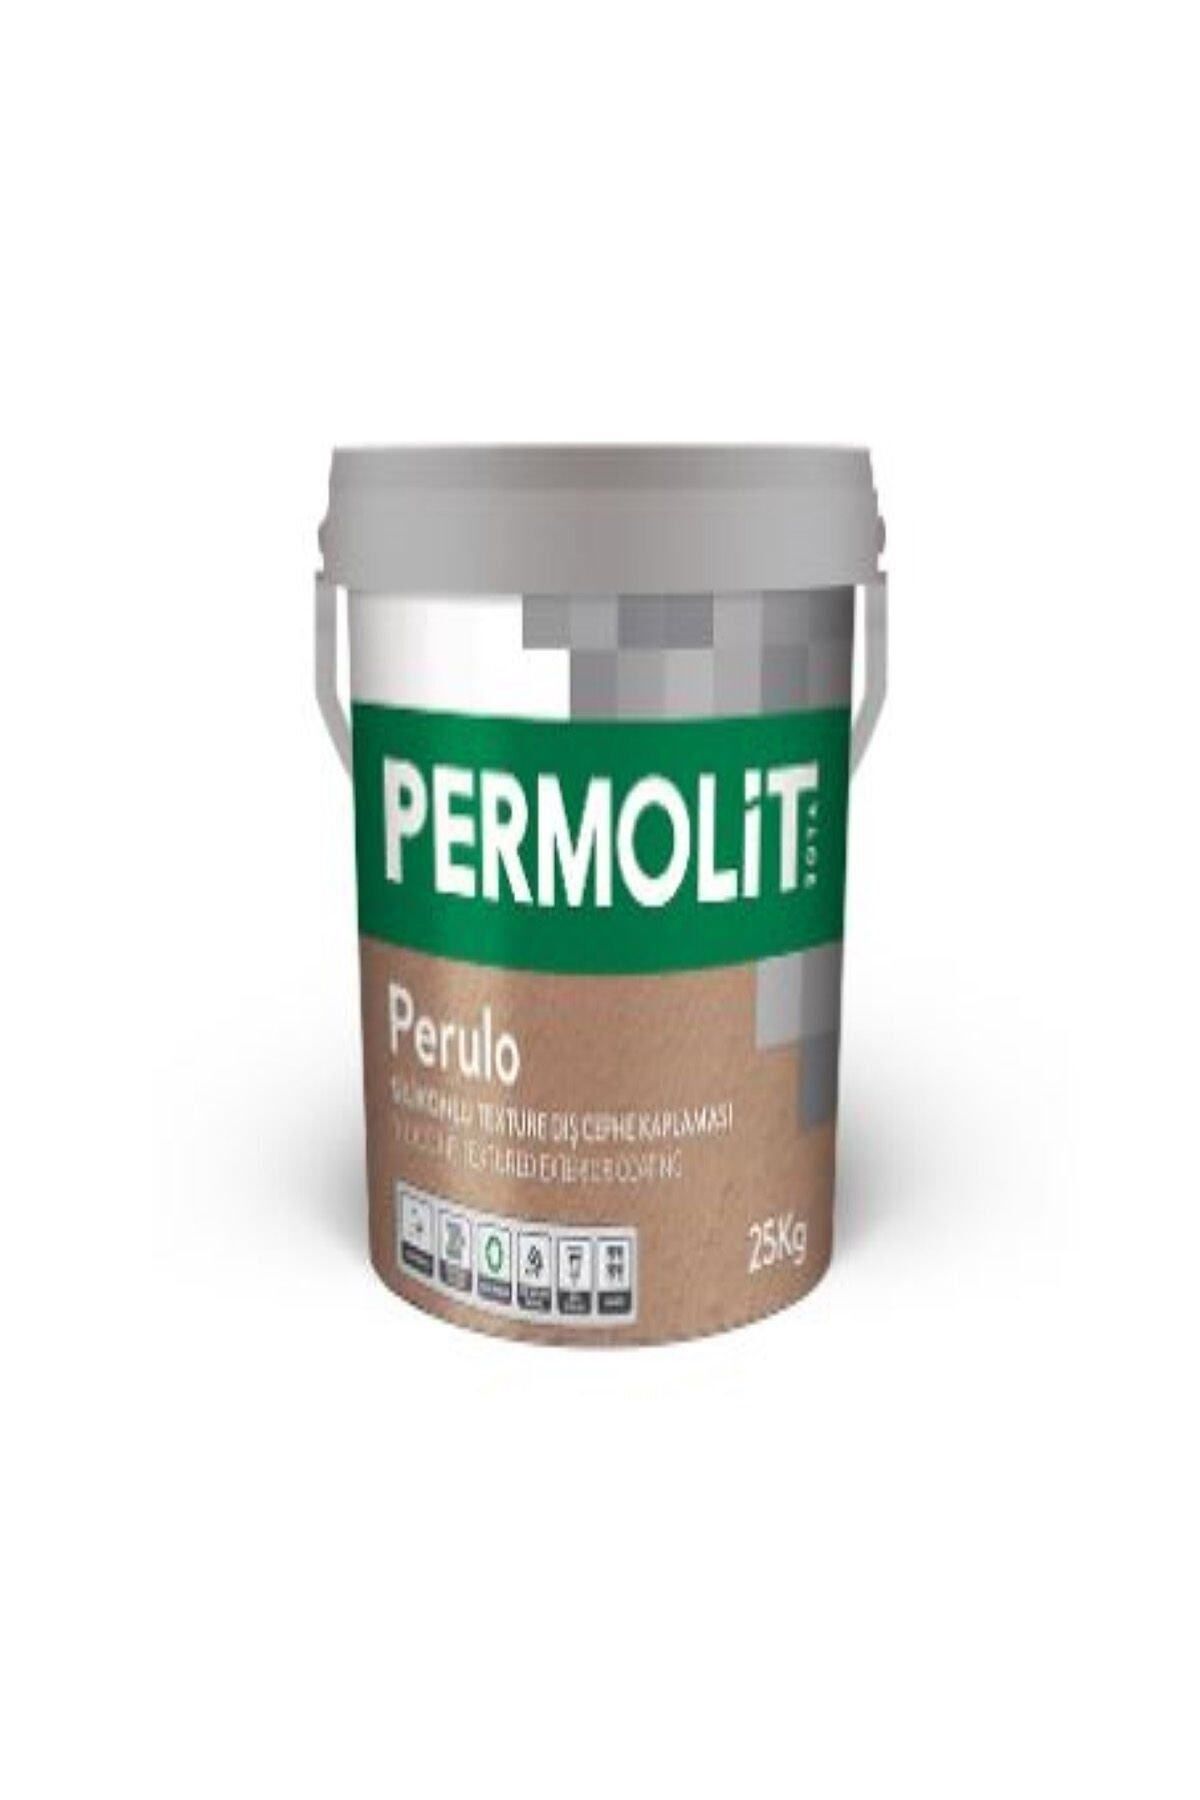 Permolit Perulo Silikonlu Texture Kaplaması